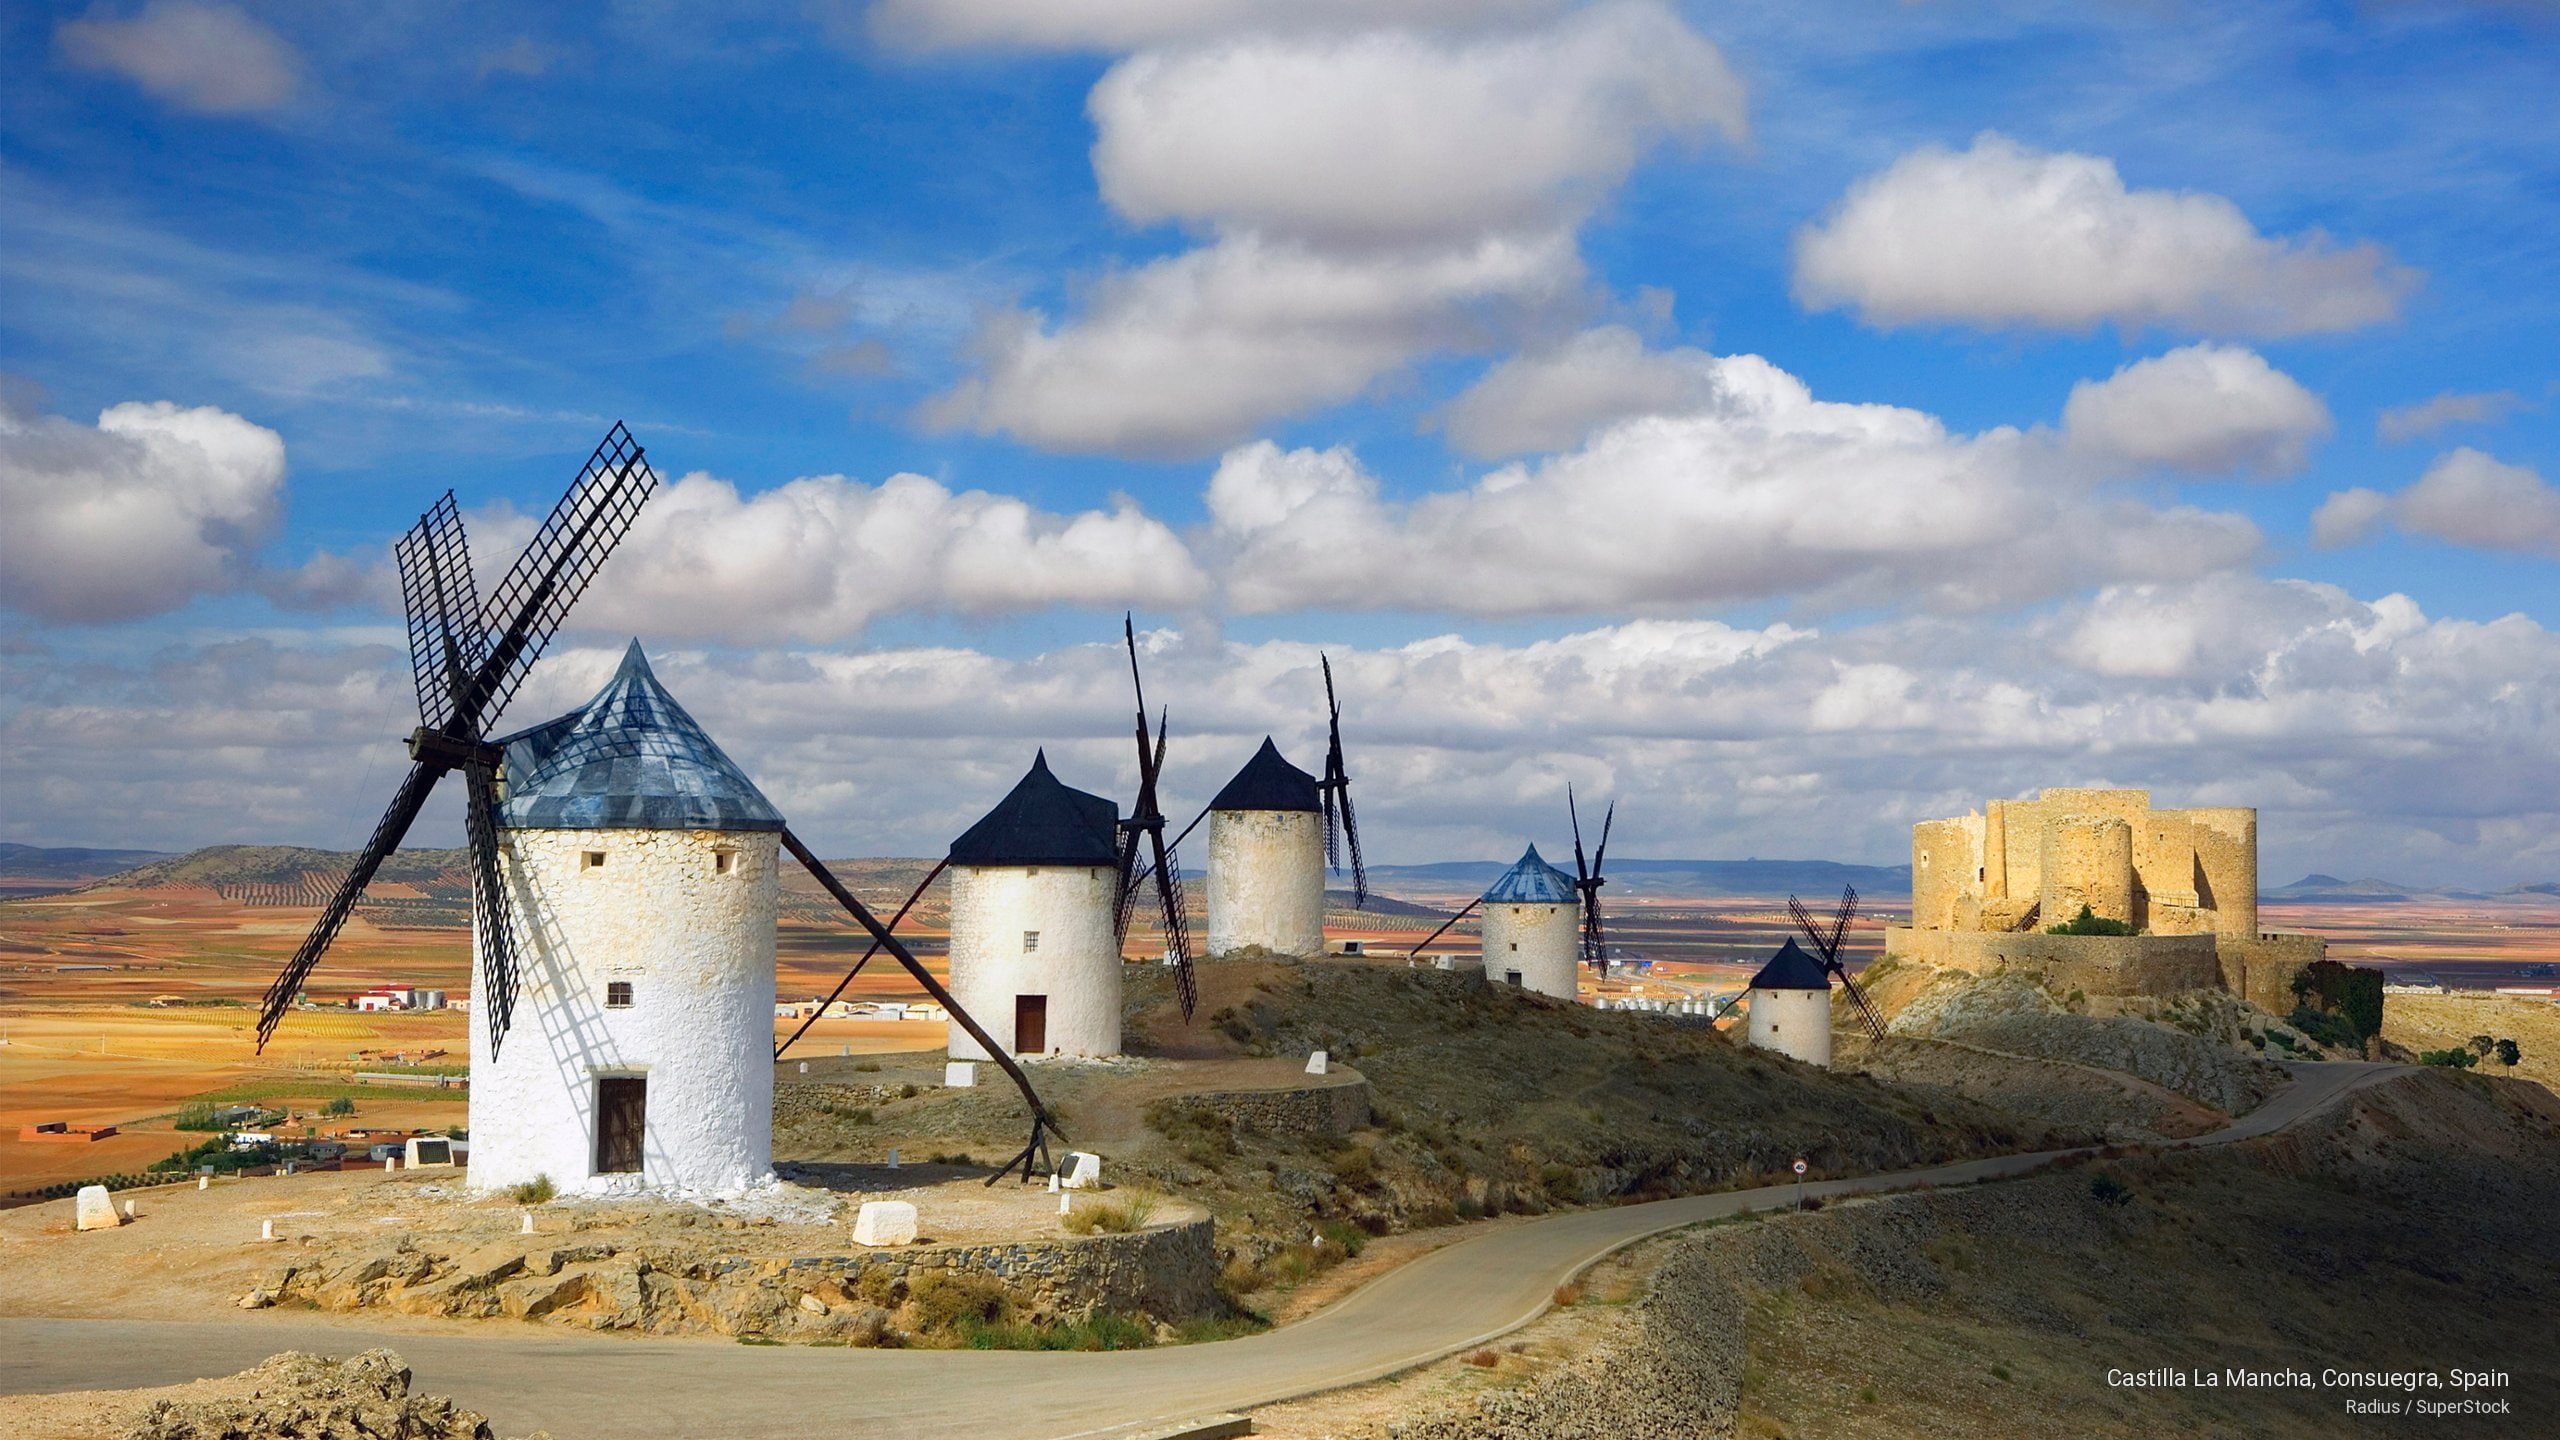 Castilla La Mancha, Consuegra, Spain, Europe